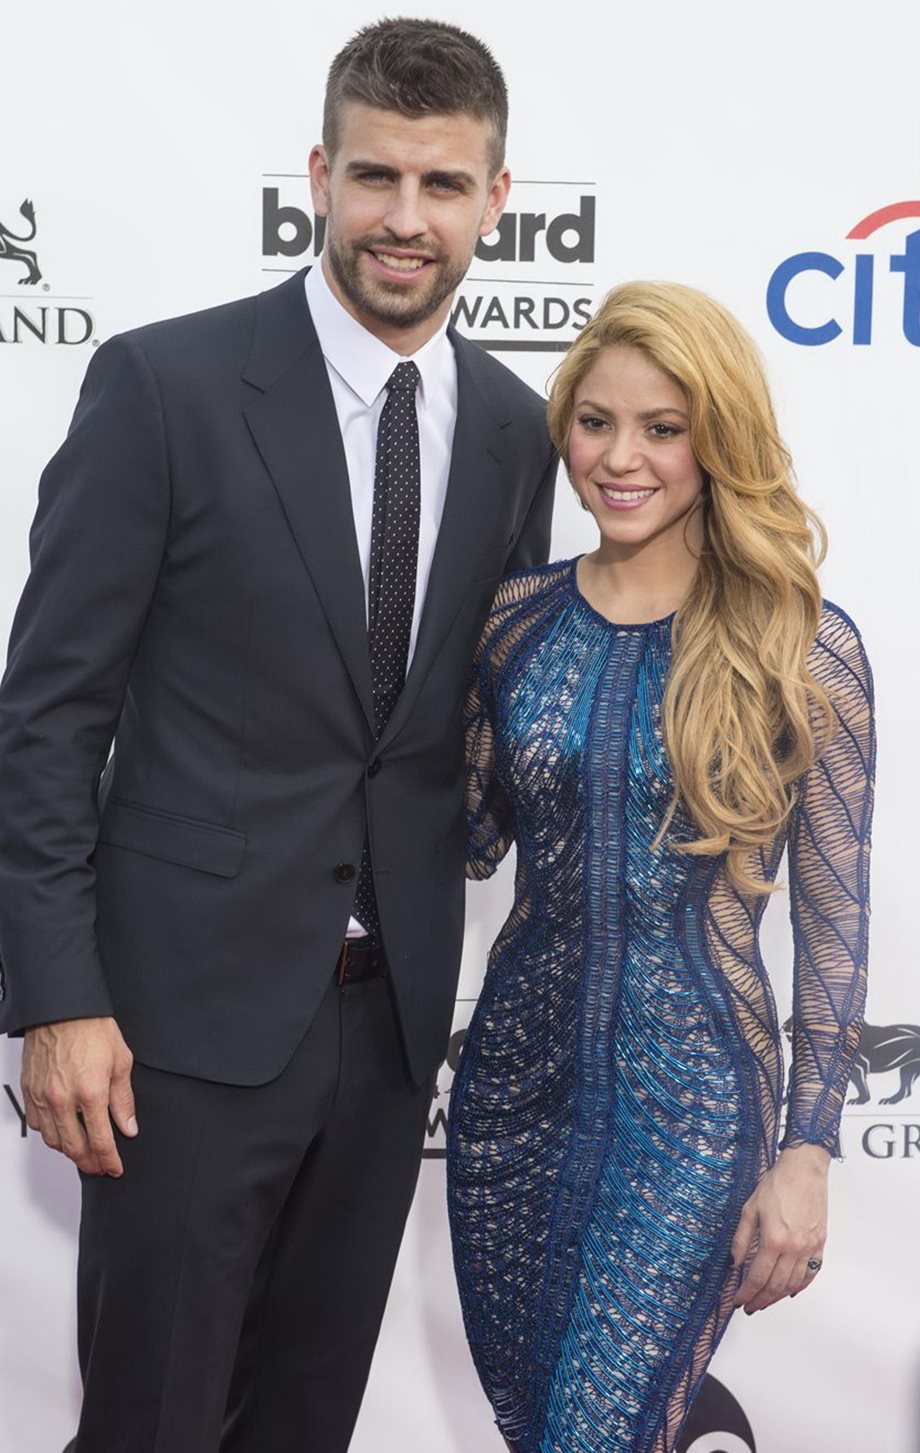 Shakira – Pique: Η απάντηση του ζευγαριού μετά τις φήμες περί διαζυγίου 